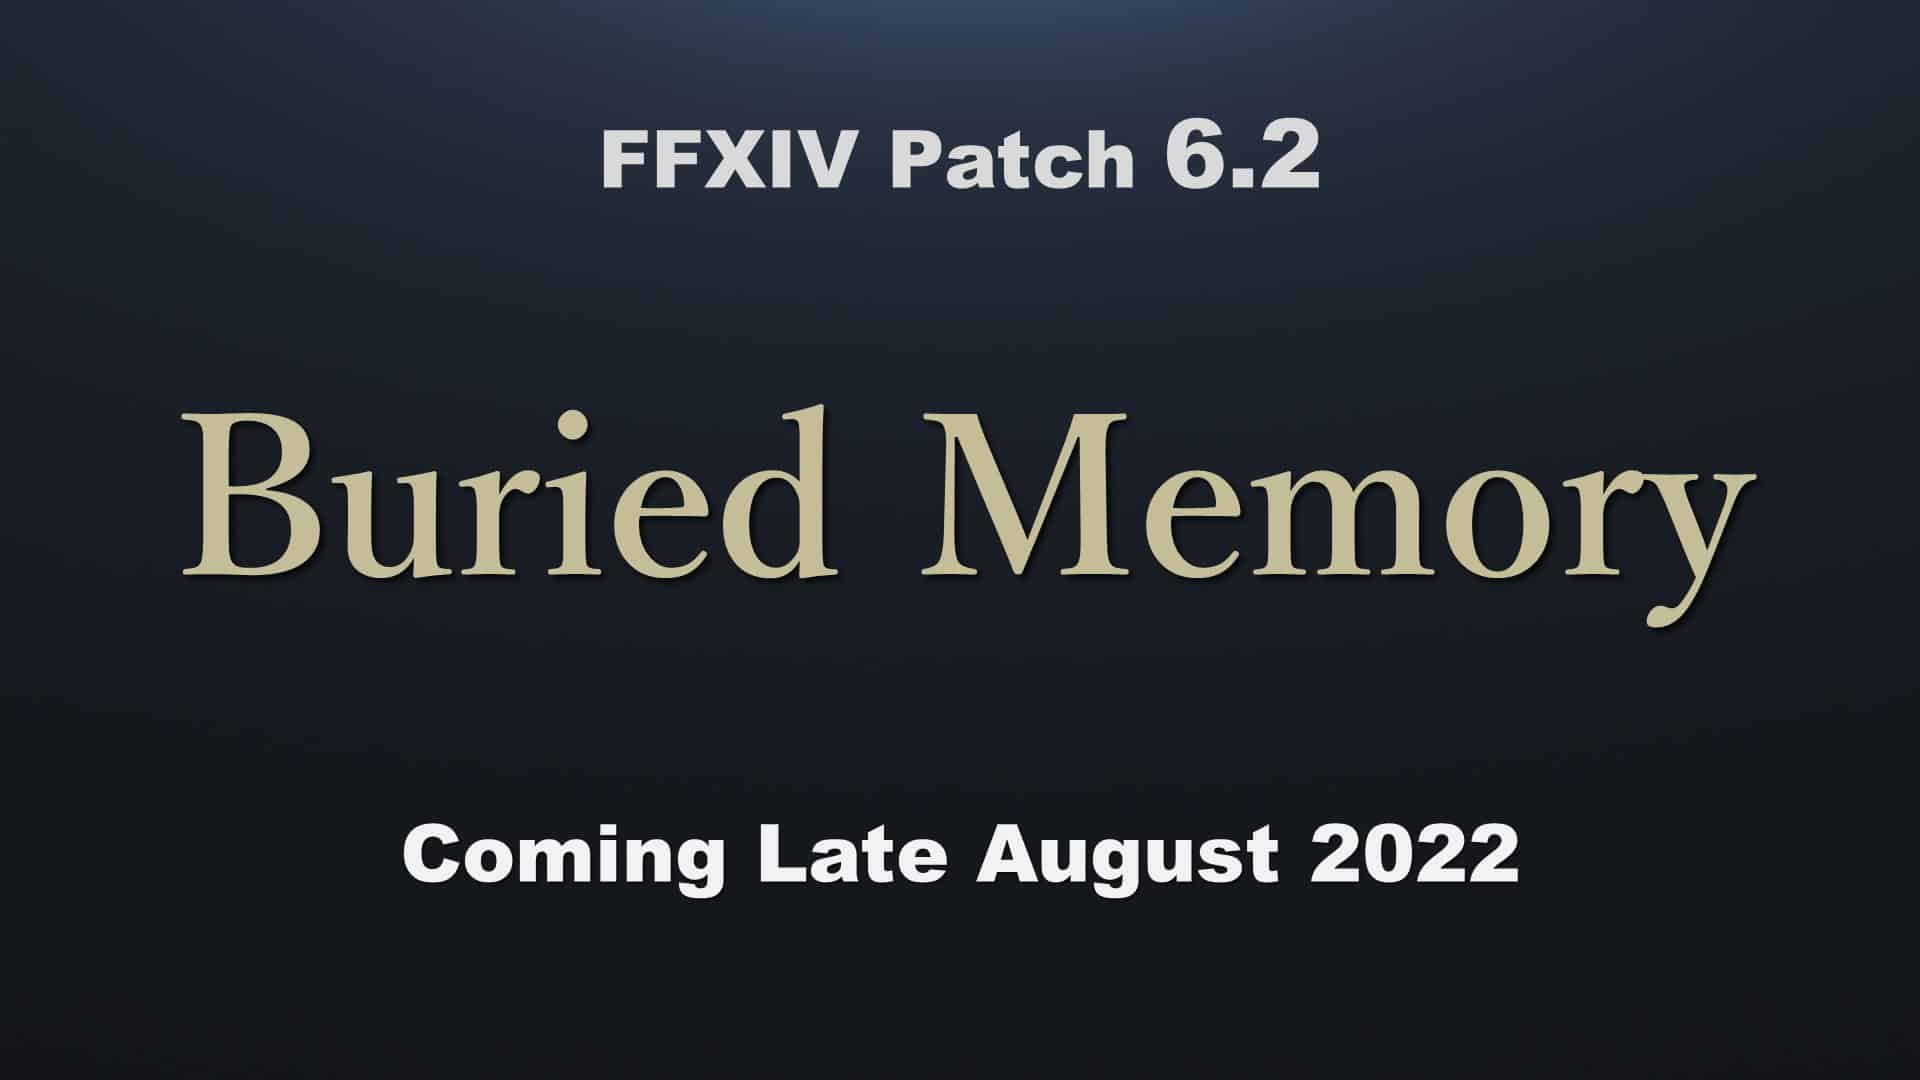 Final Fantasy 14 upcoming update 6.2